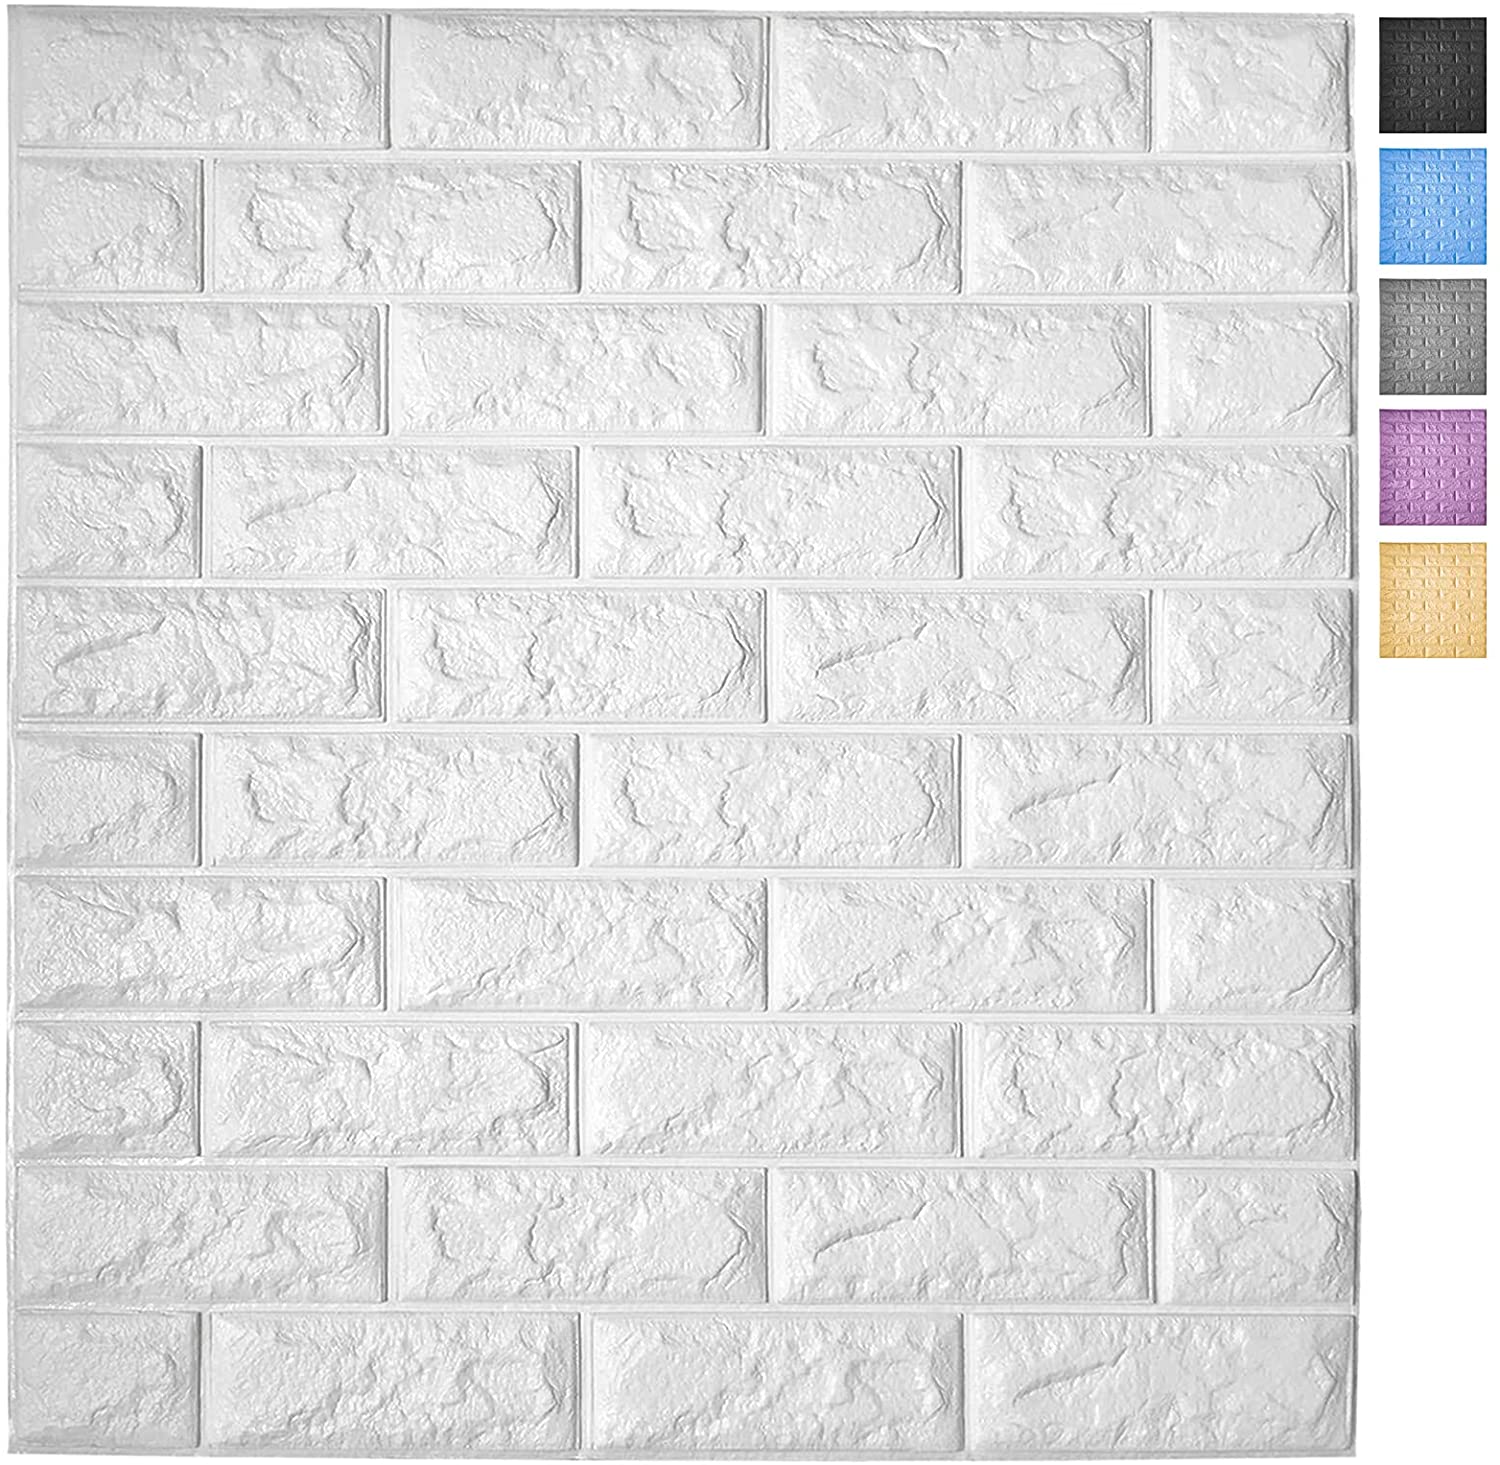 A06004-Peel and Stick 3D Wall Panels for Interior Wall Decor, Self-Adhesive Foam Brick Wallpaper